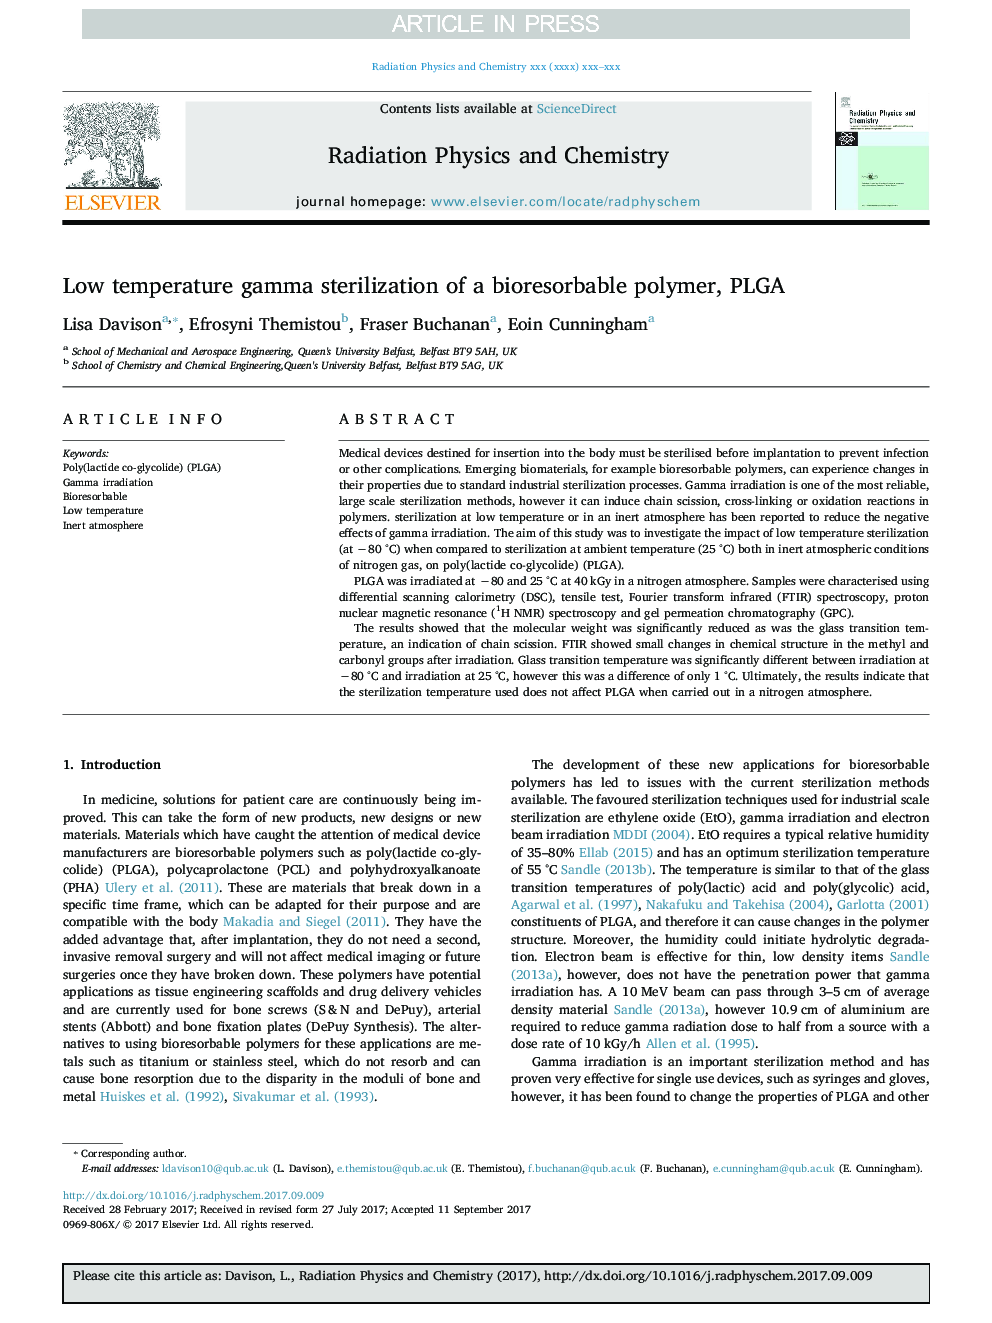 Low temperature gamma sterilization of a bioresorbable polymer, PLGA